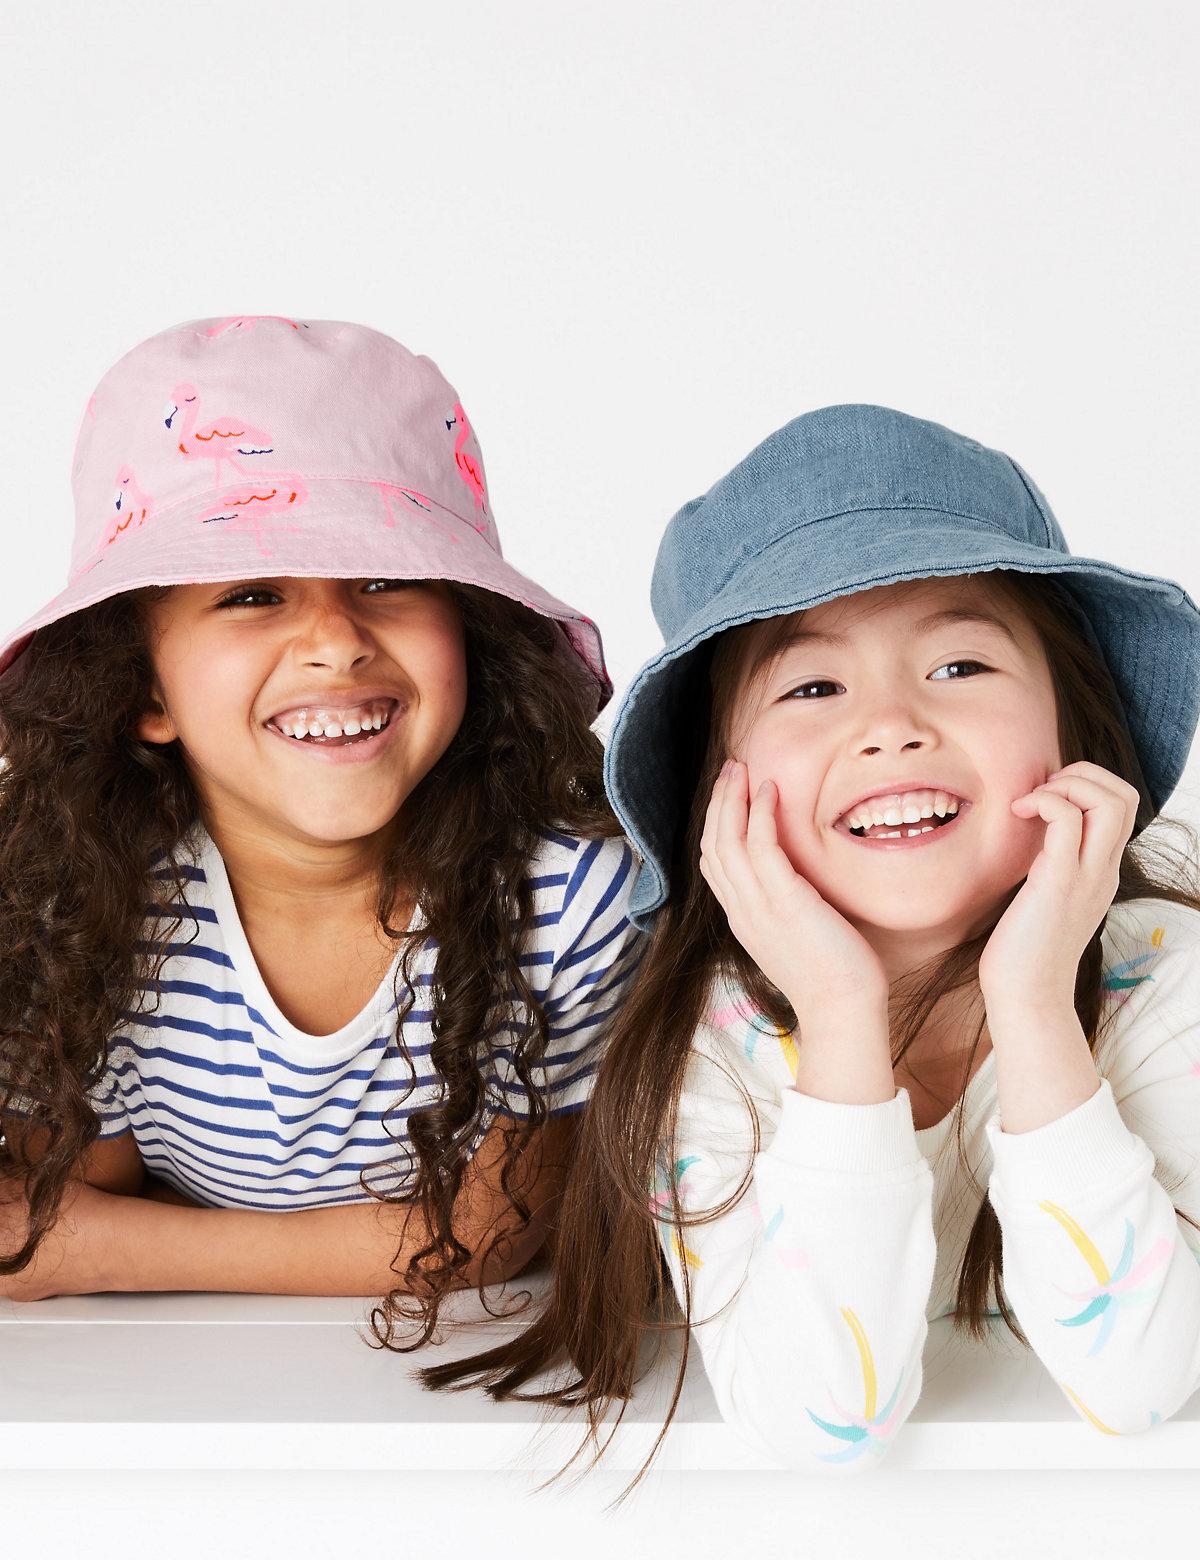 Kids' 2 Pack Flamingo Sun Hats (1-6 Yrs)